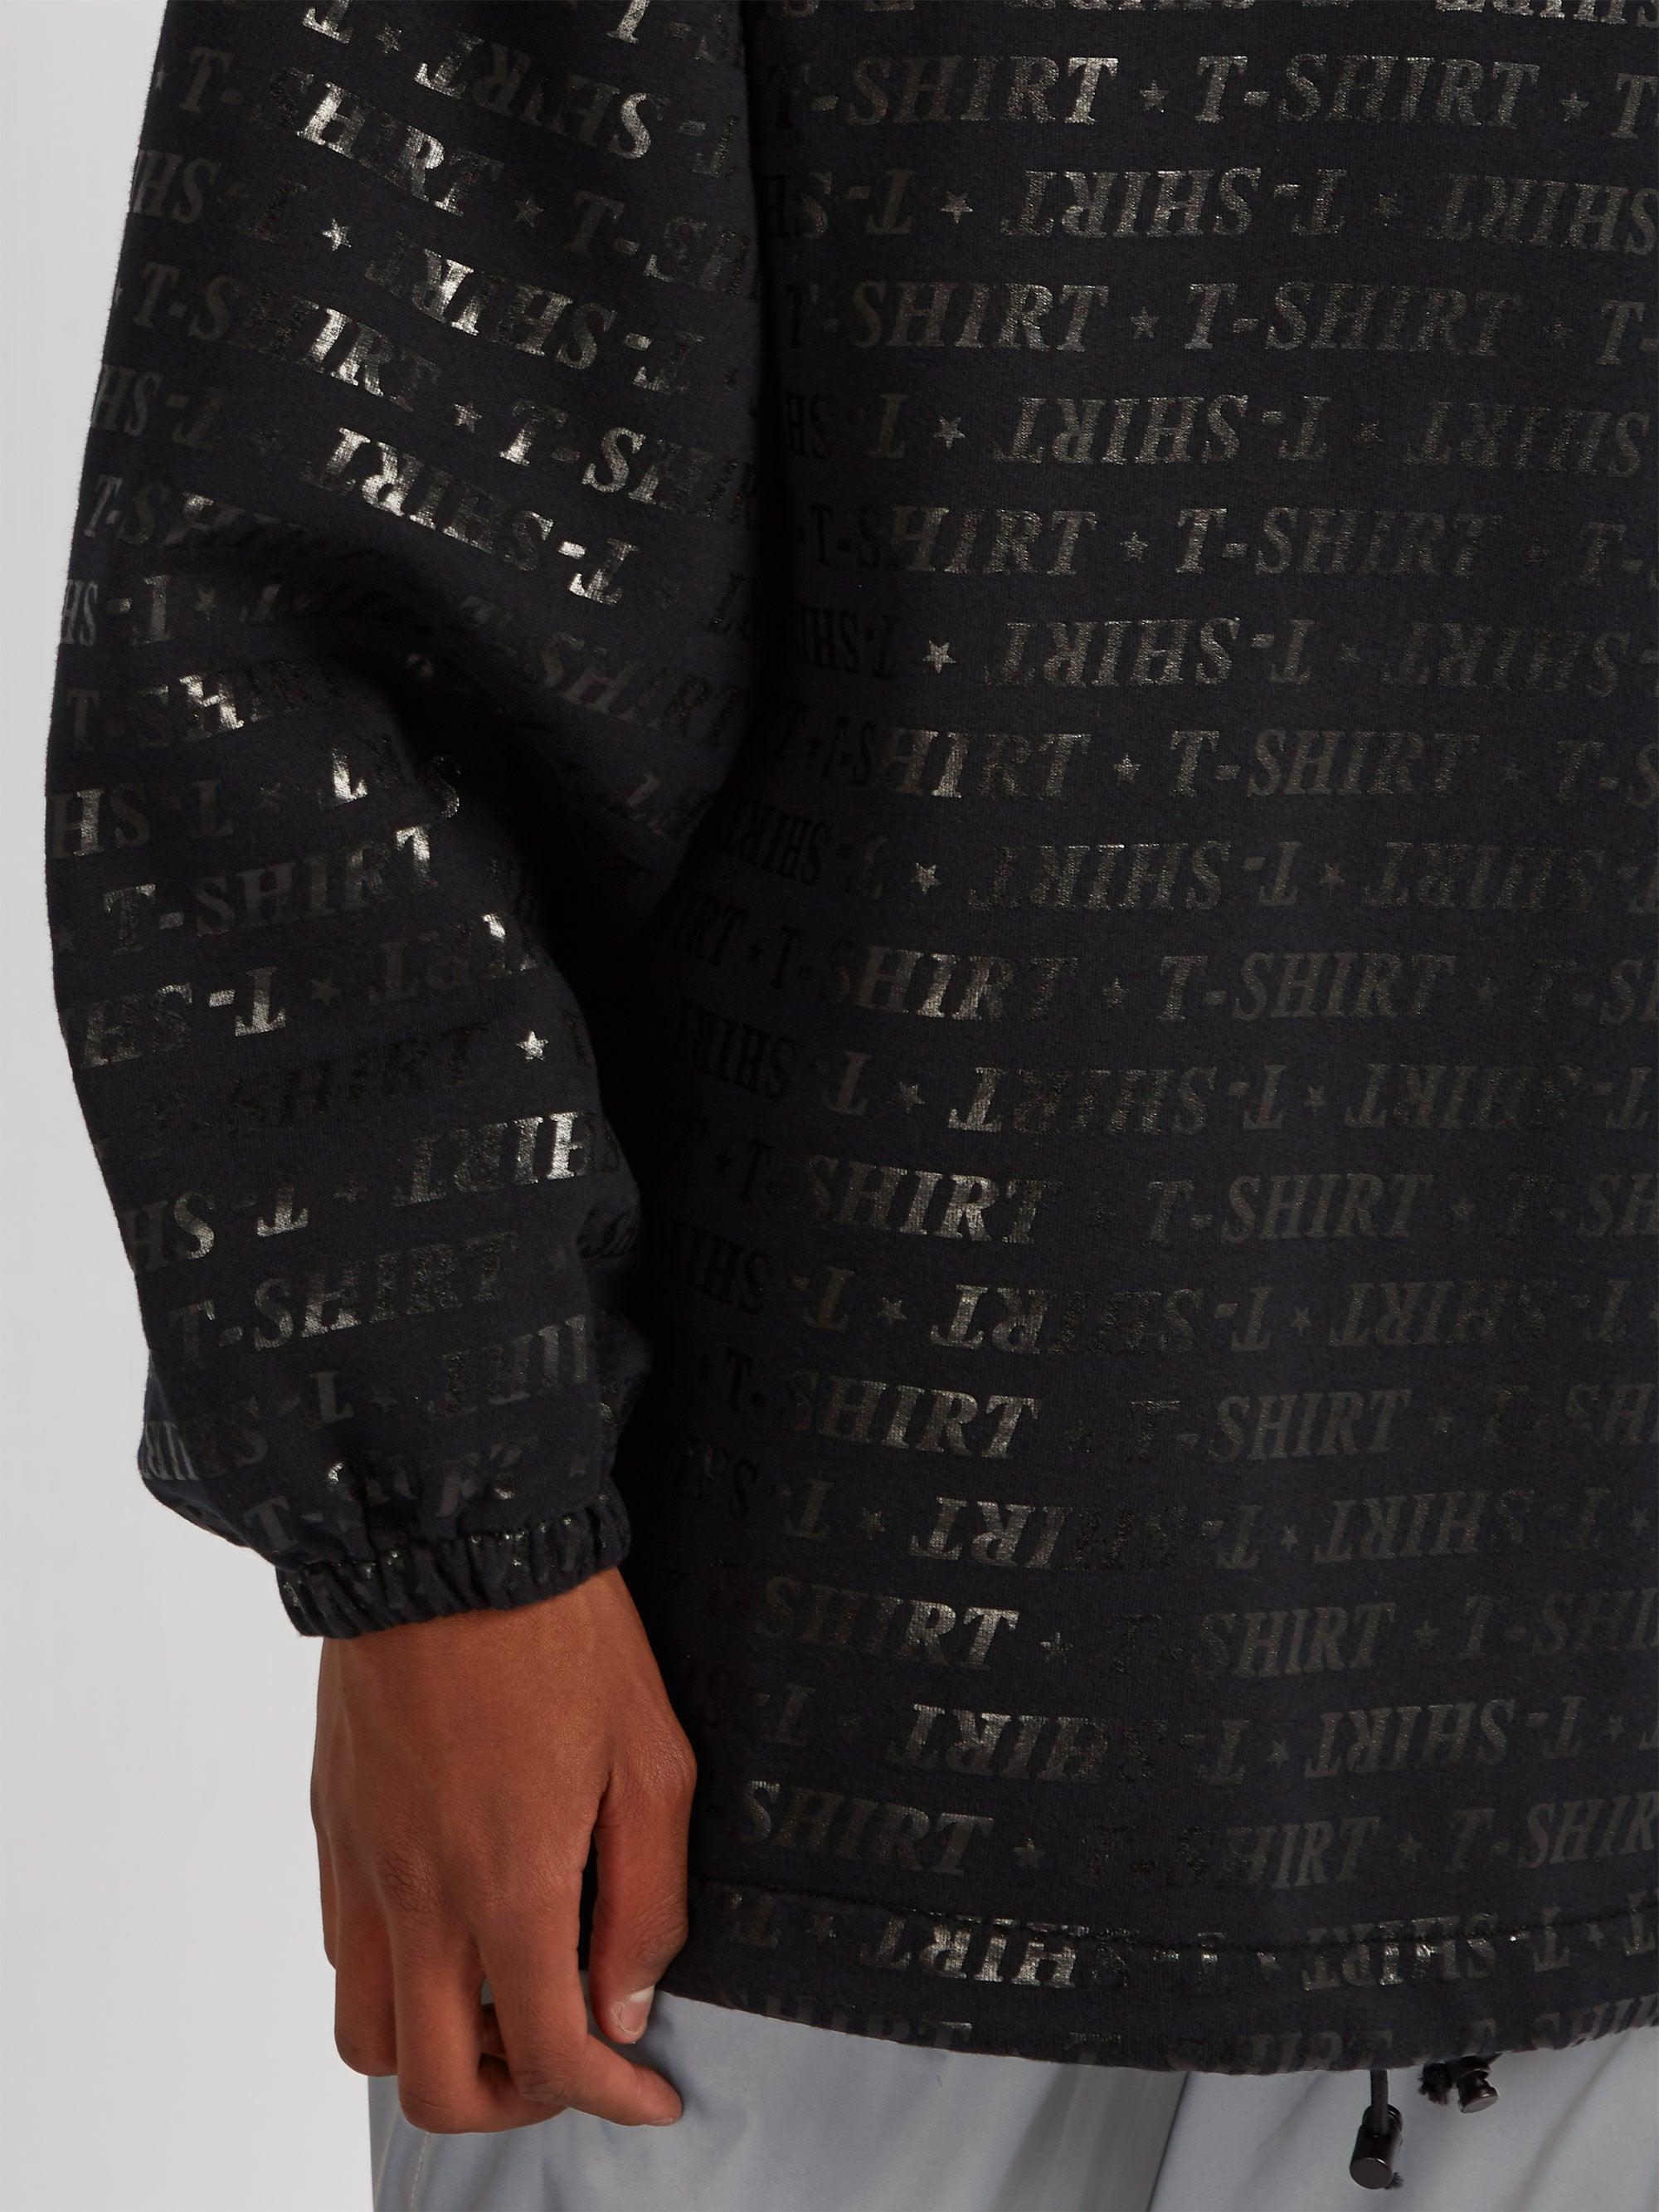 Balenciaga Oversized Printed Cotton-blend Sweatshirt in Black for Men - Lyst